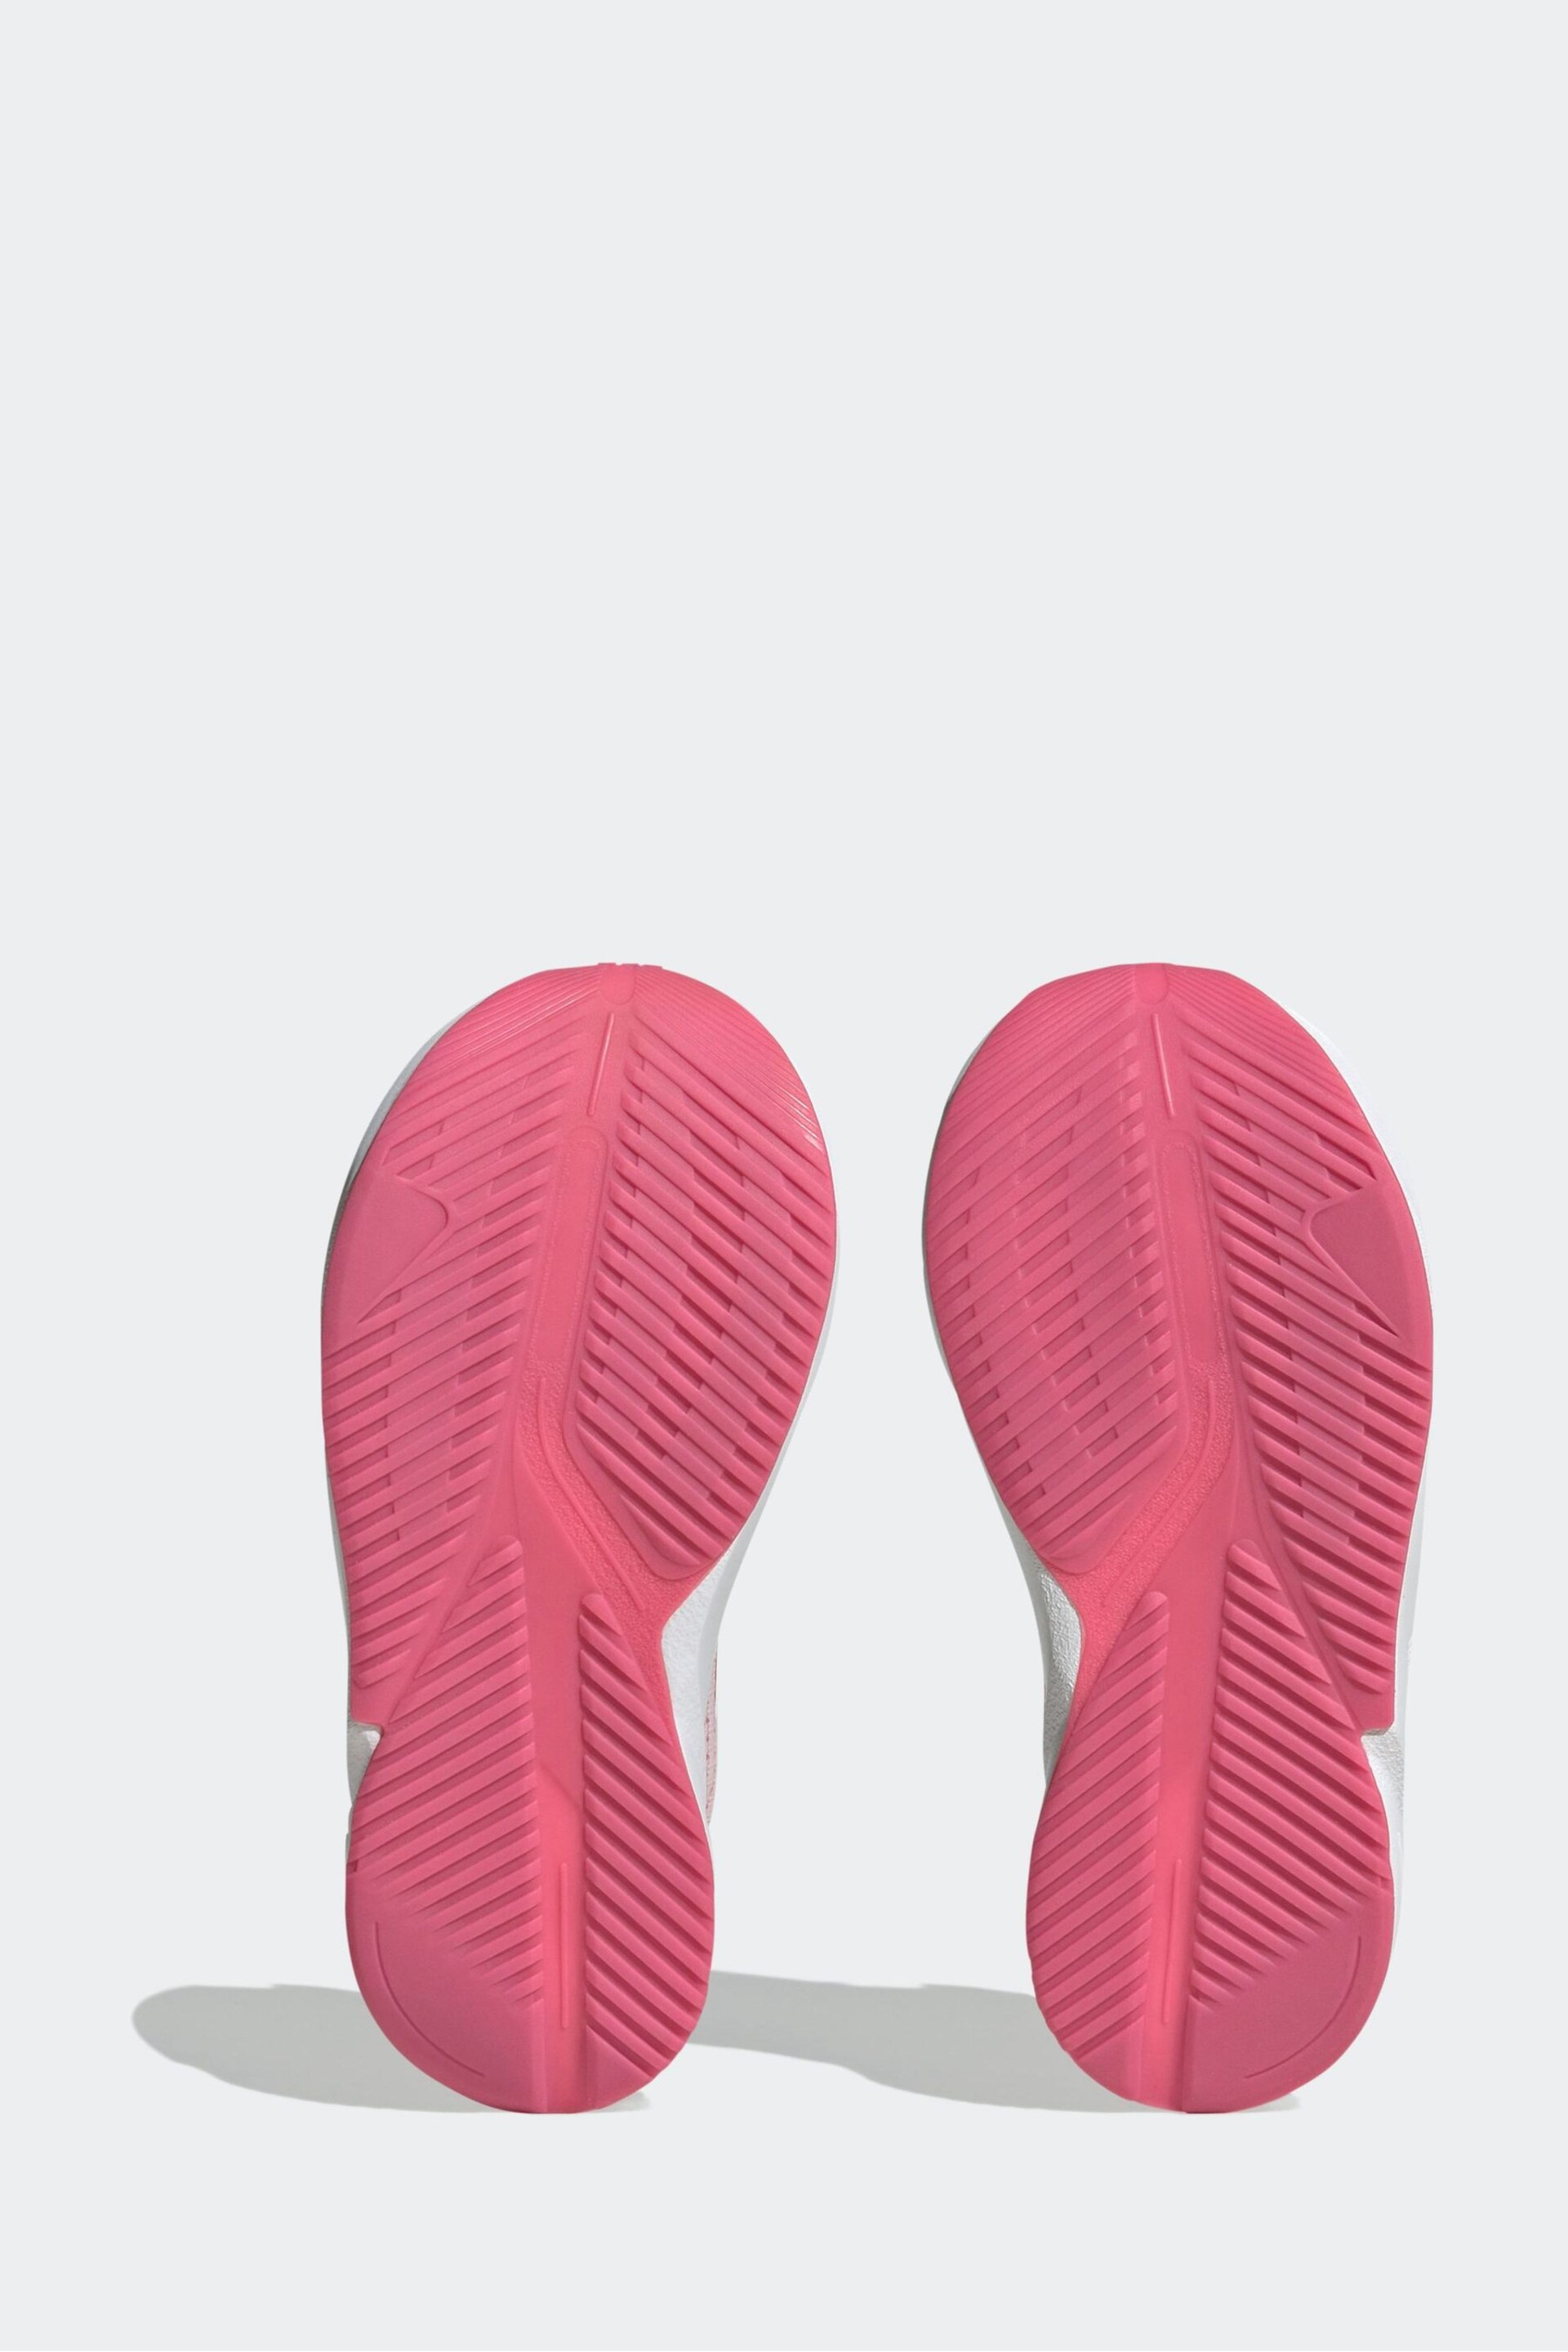 adidas Pink Kids Duramo SL Trainers - Image 6 of 8